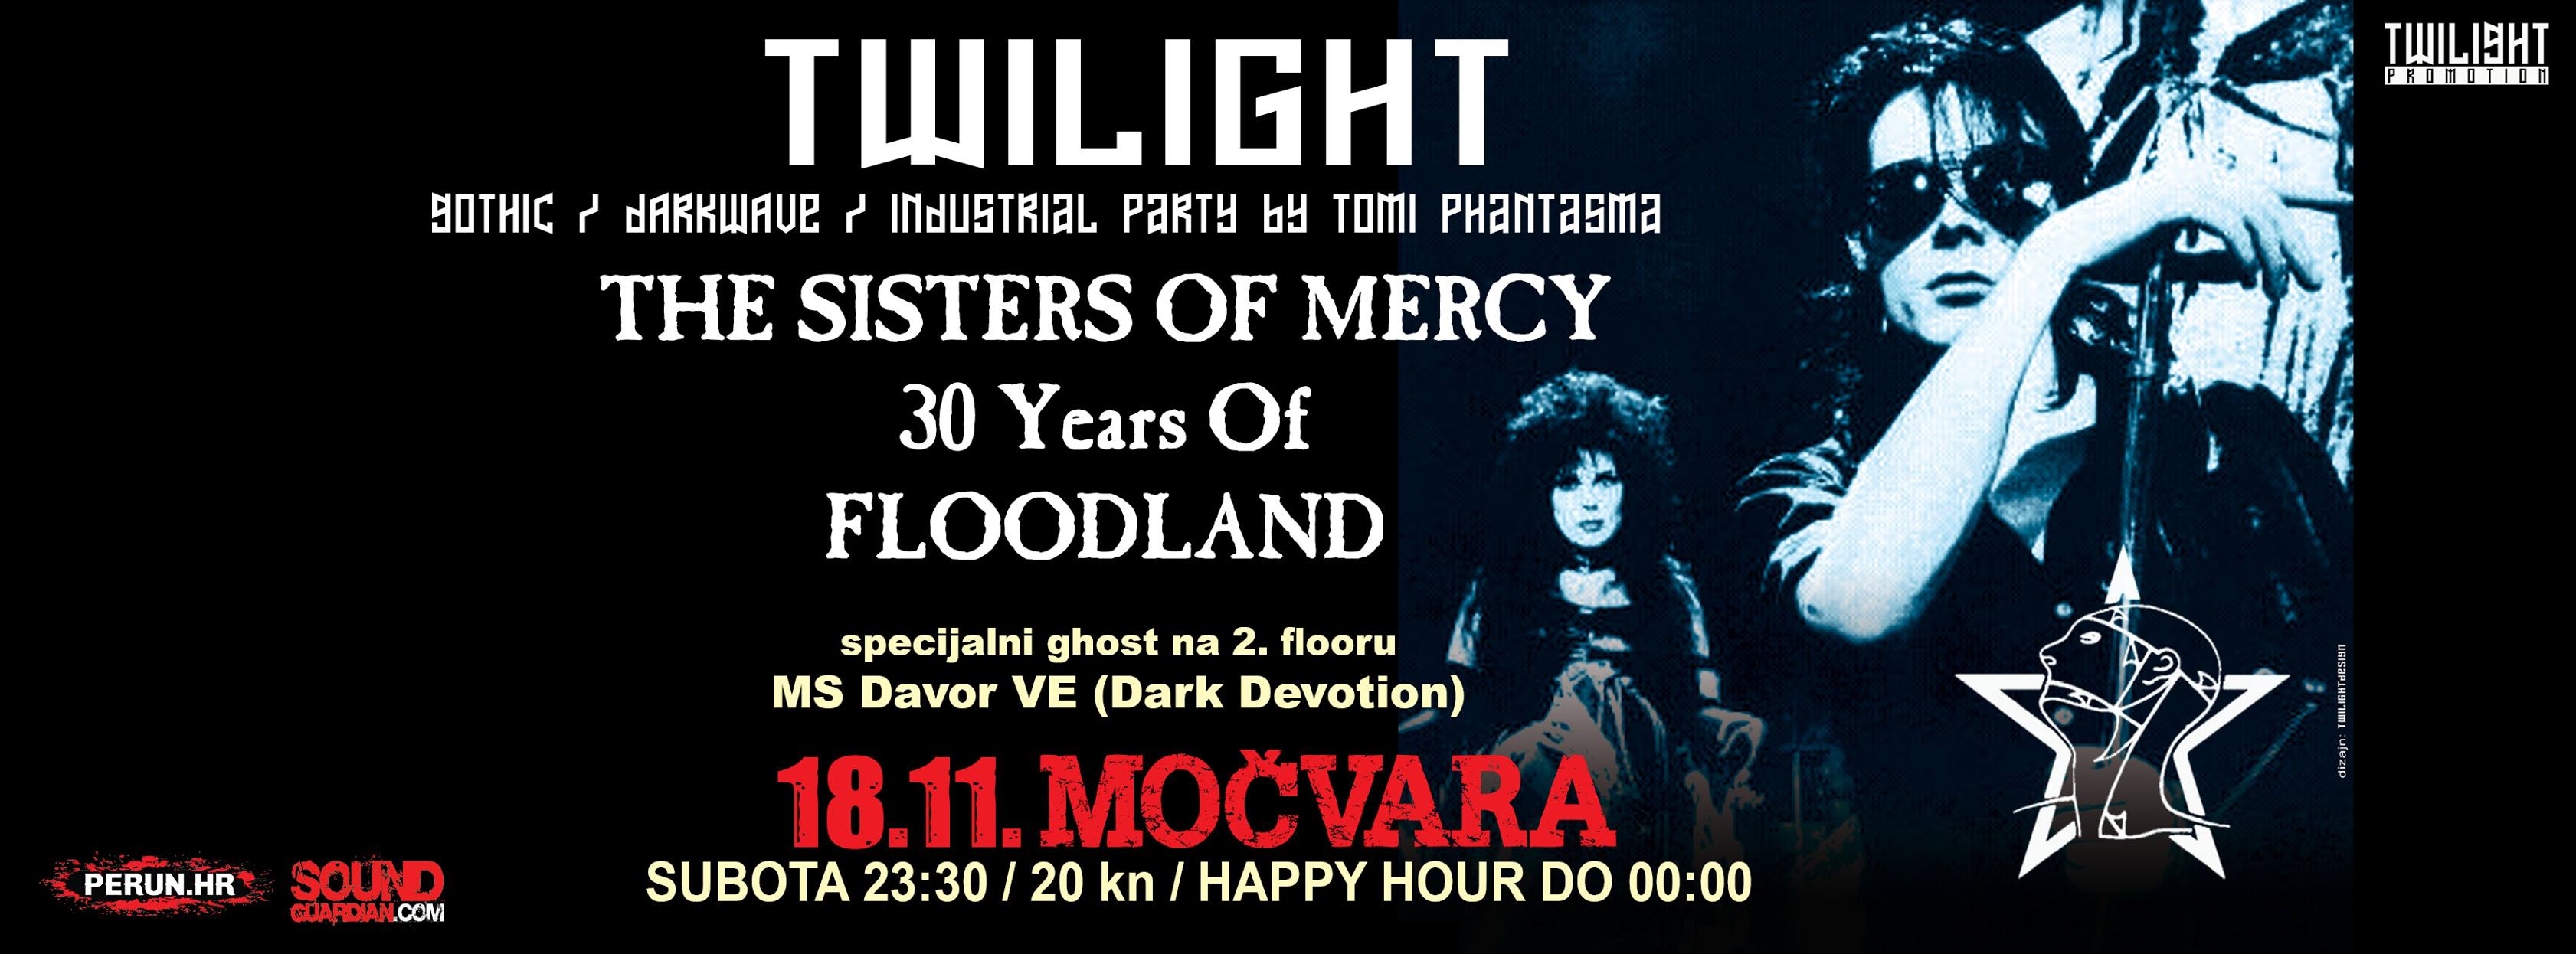 Twilight -The Sisters Of Mercy night 18.11.2017. Močvara